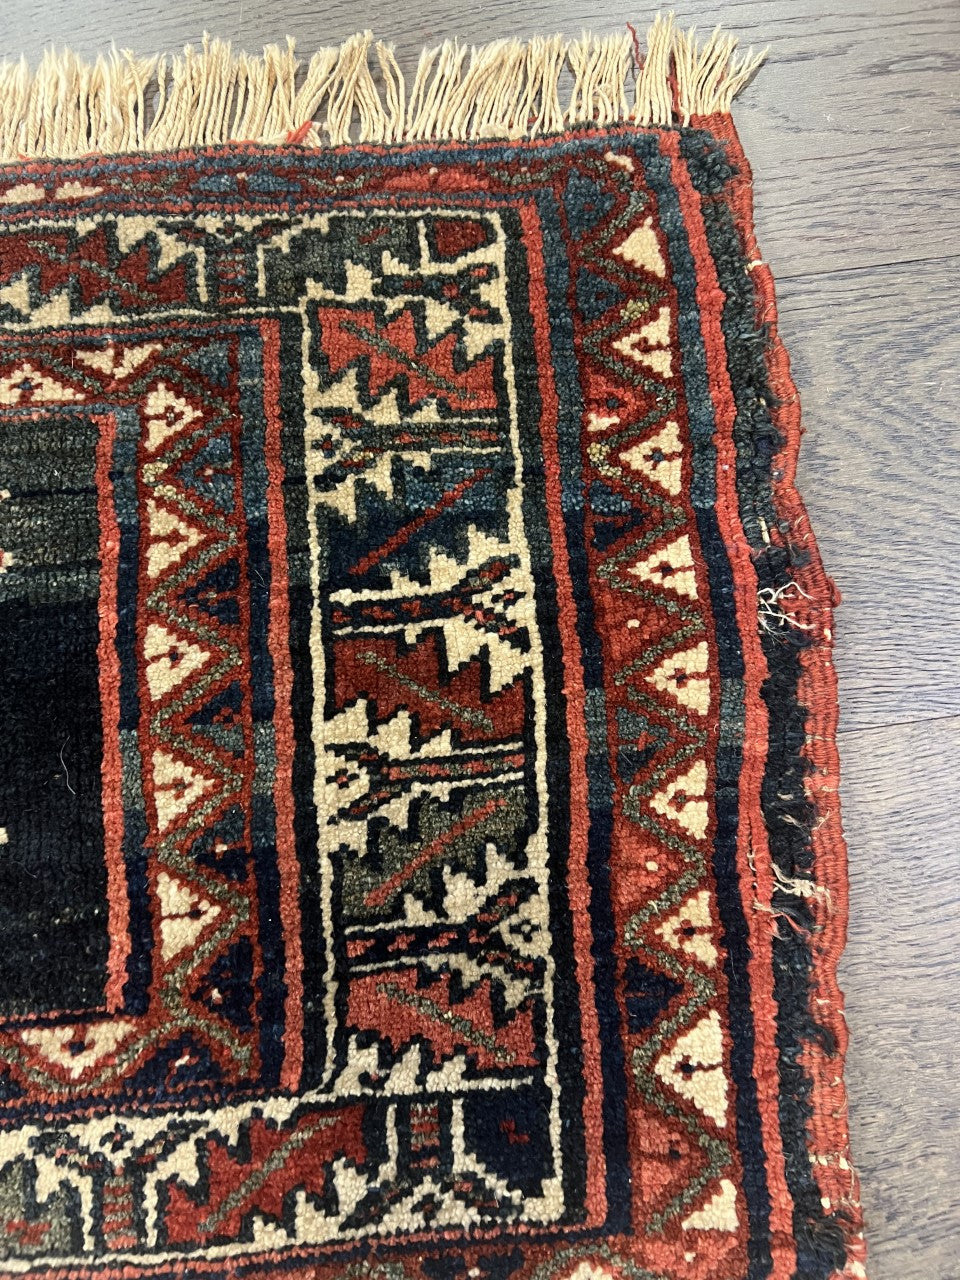 Amazing old antique Veramin Mafrash rug - Hakiemie Rug Gallery